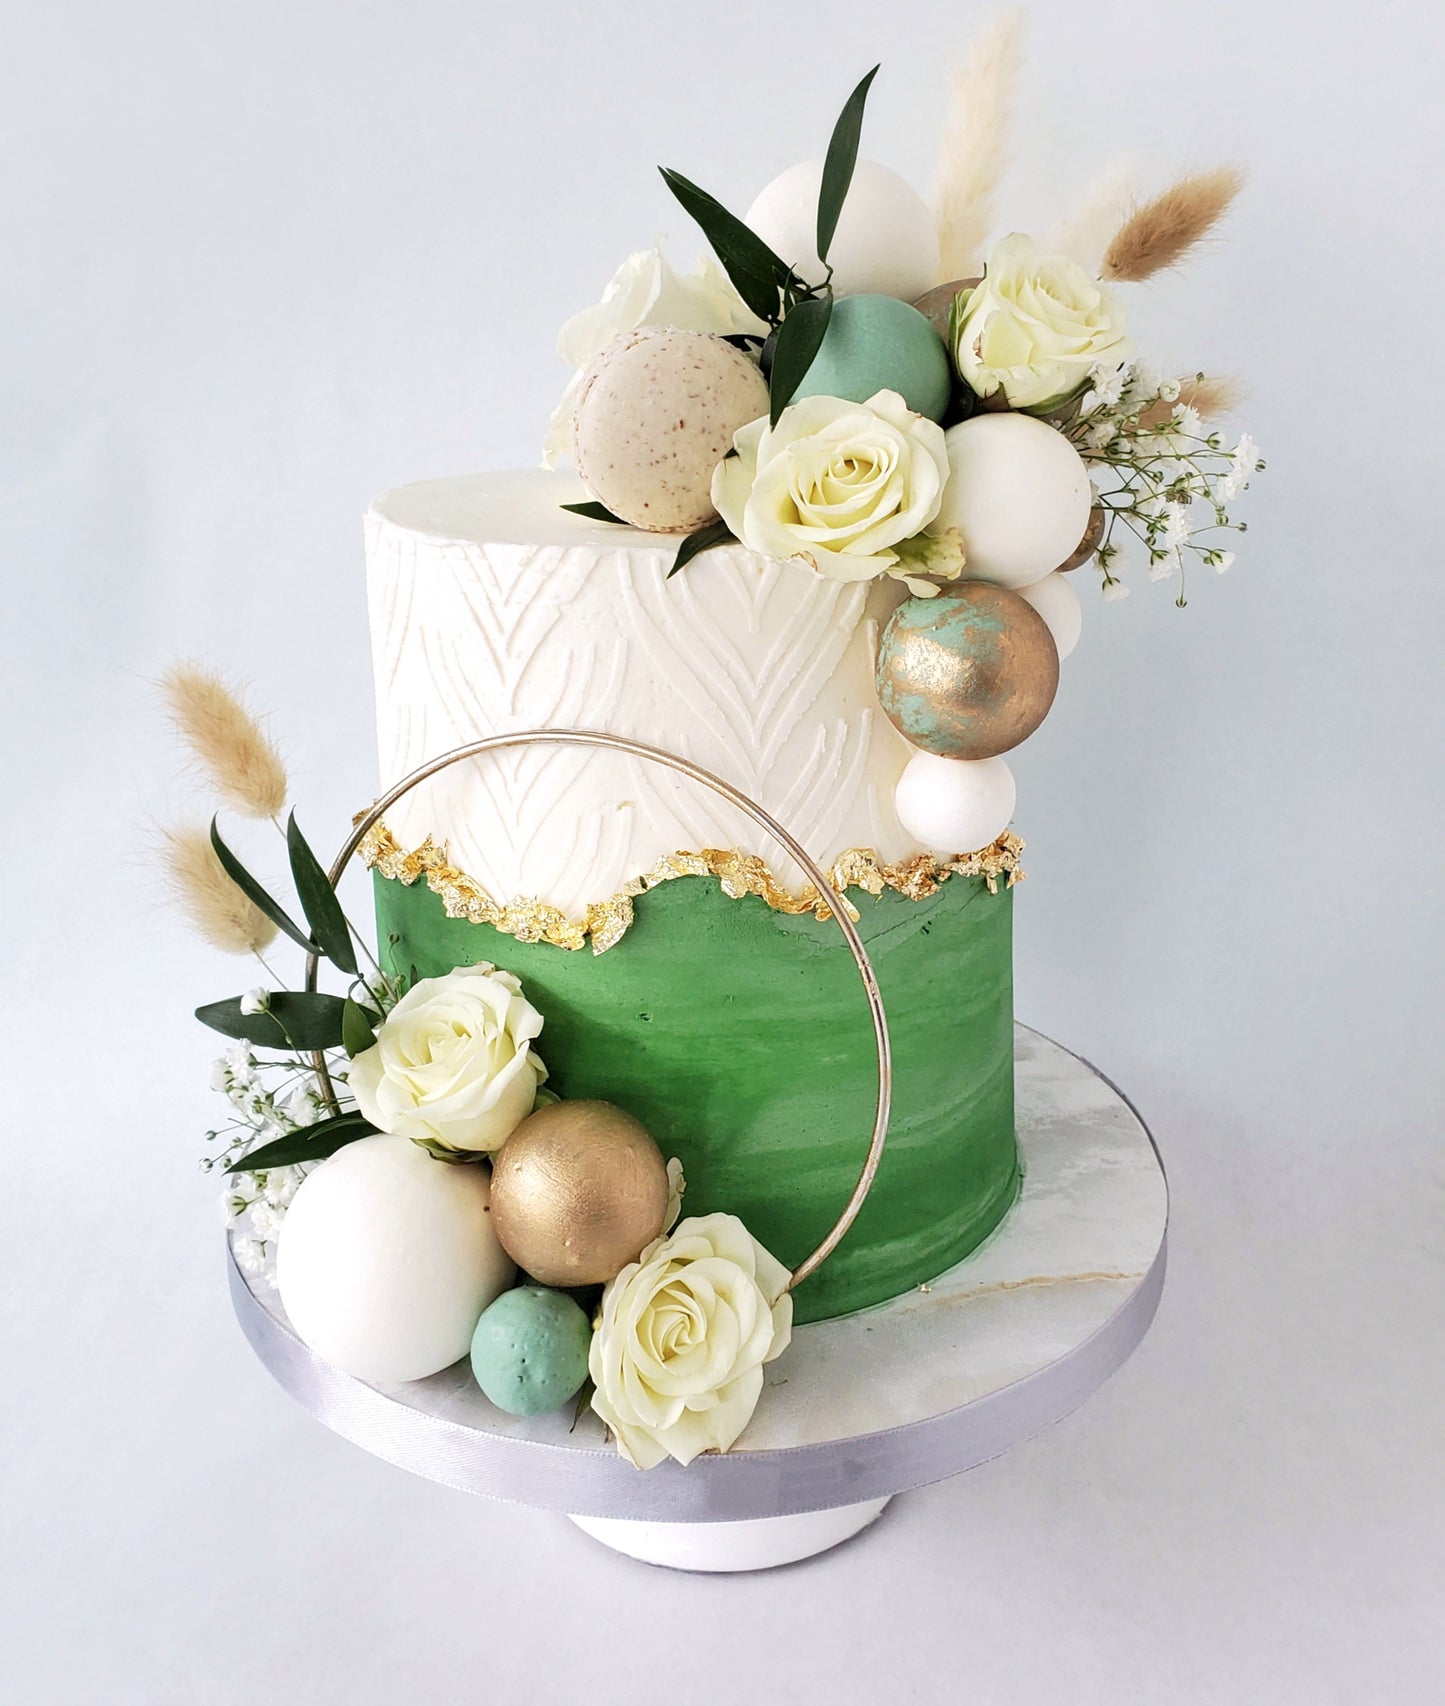 Intro to Cake Decorating (SUN JUN 11)